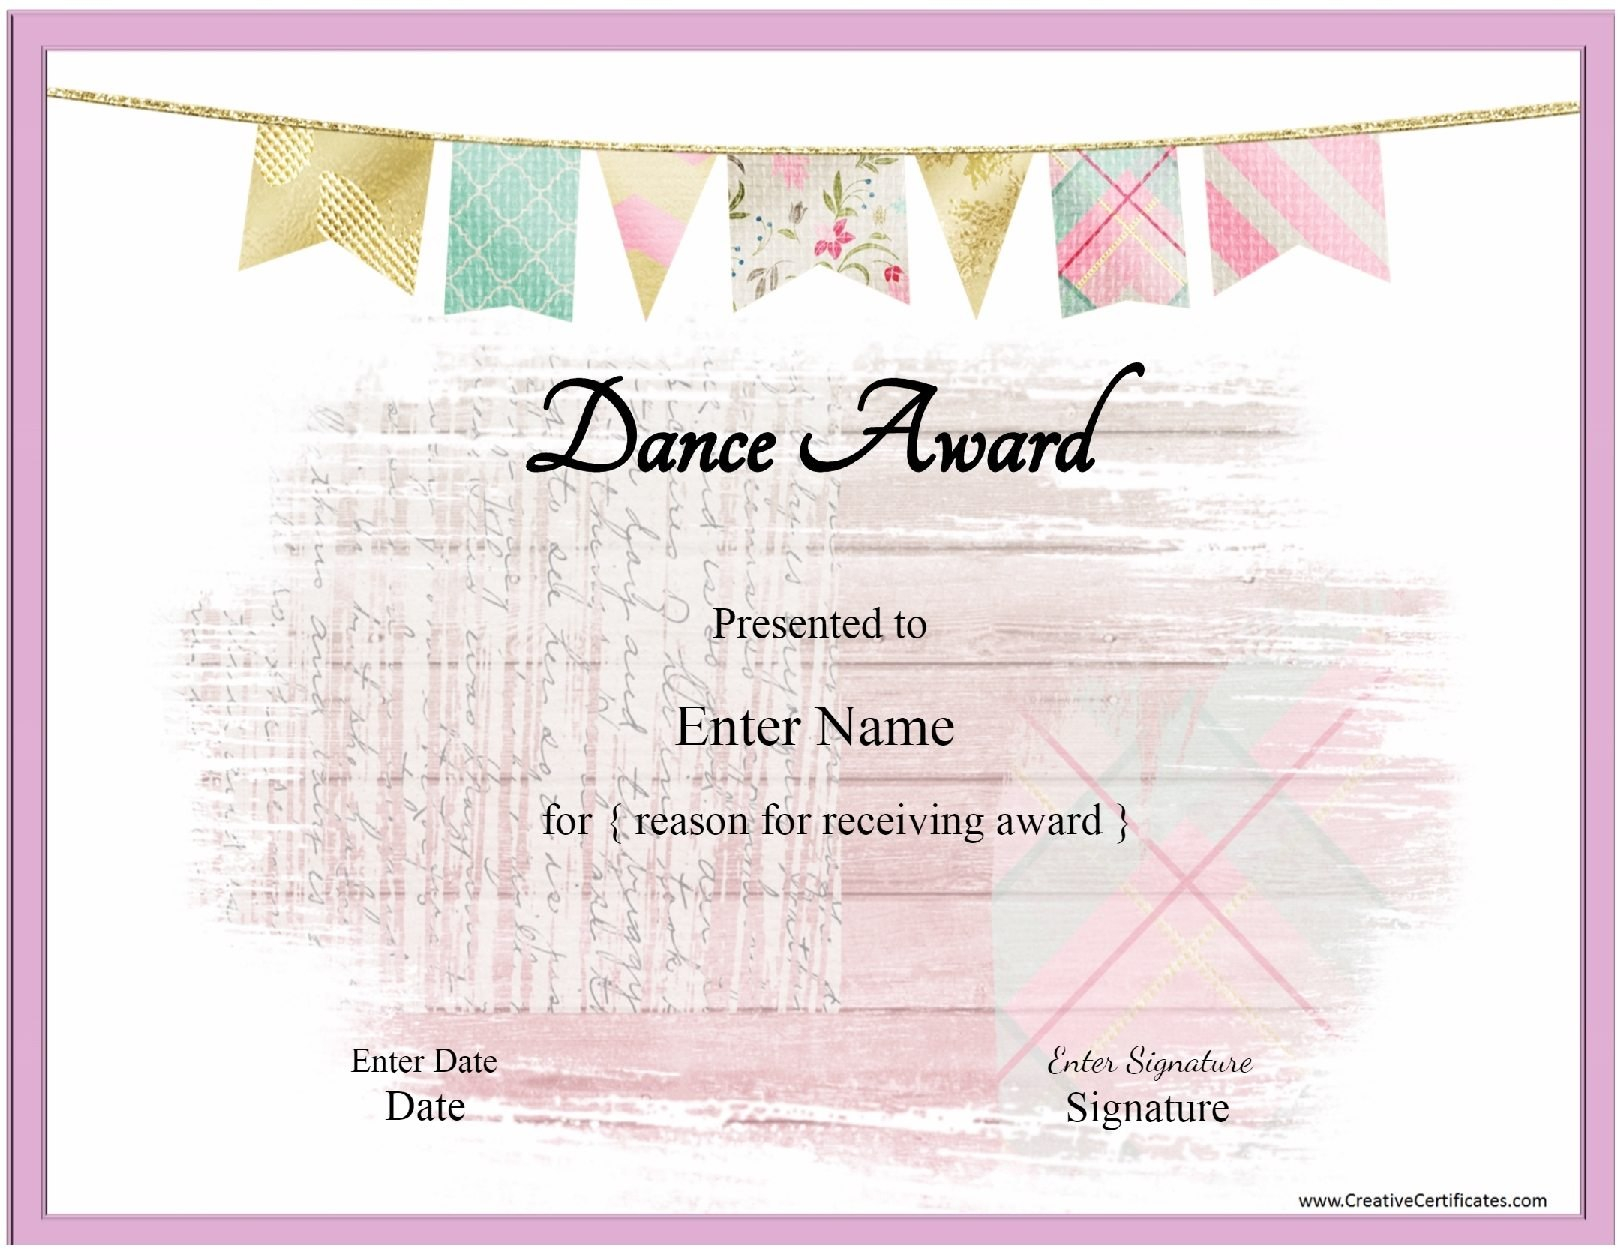 Dance Award Certificate Template  Wosing Template Design within Dance Certificate Template